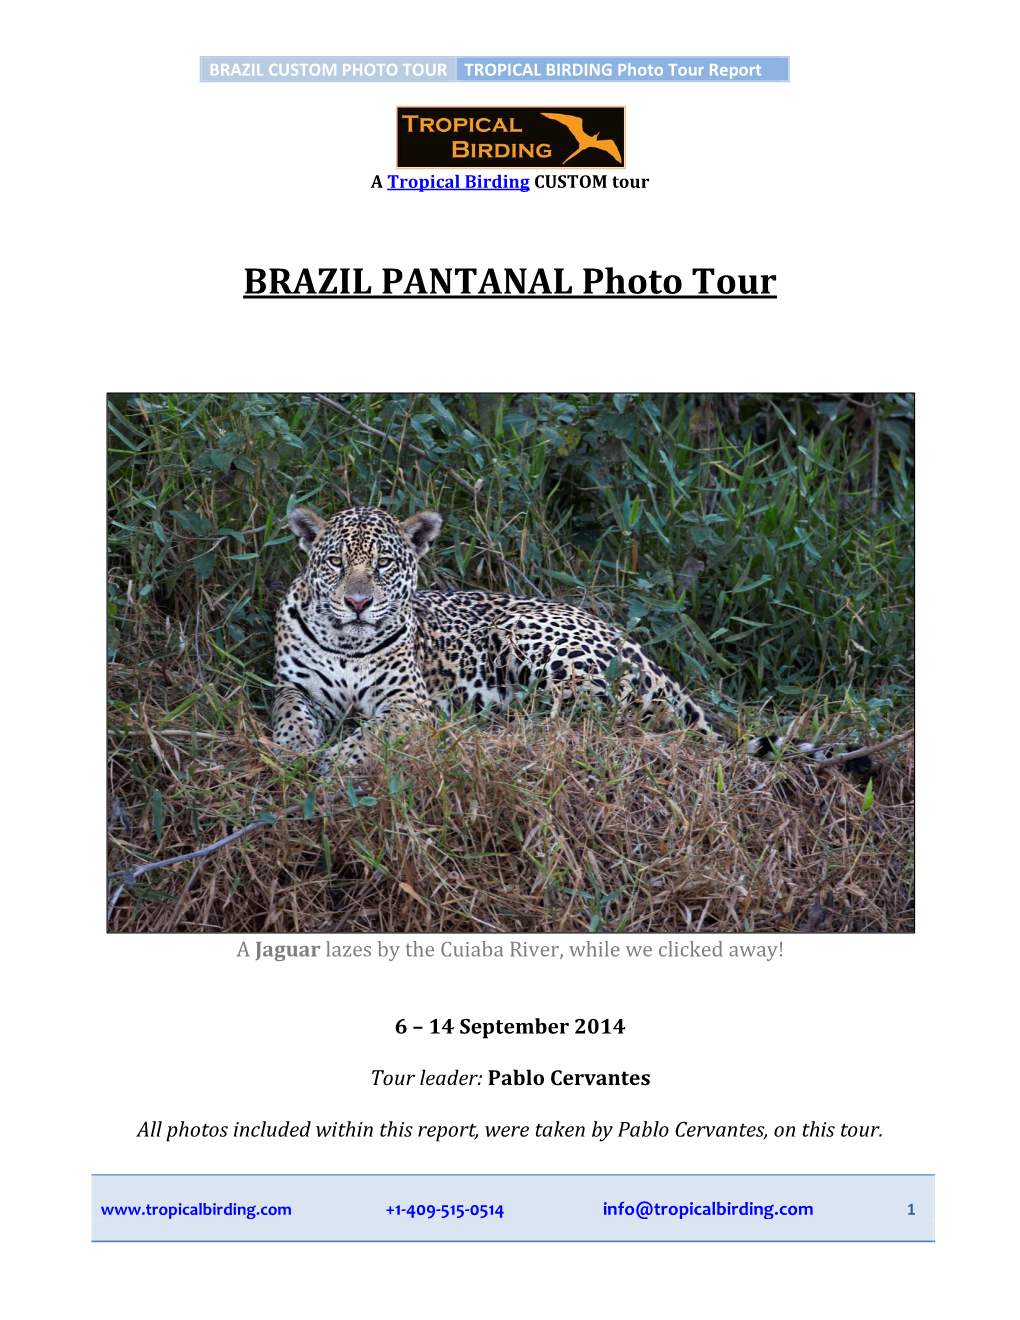 BRAZIL PANTANAL Photo Tour